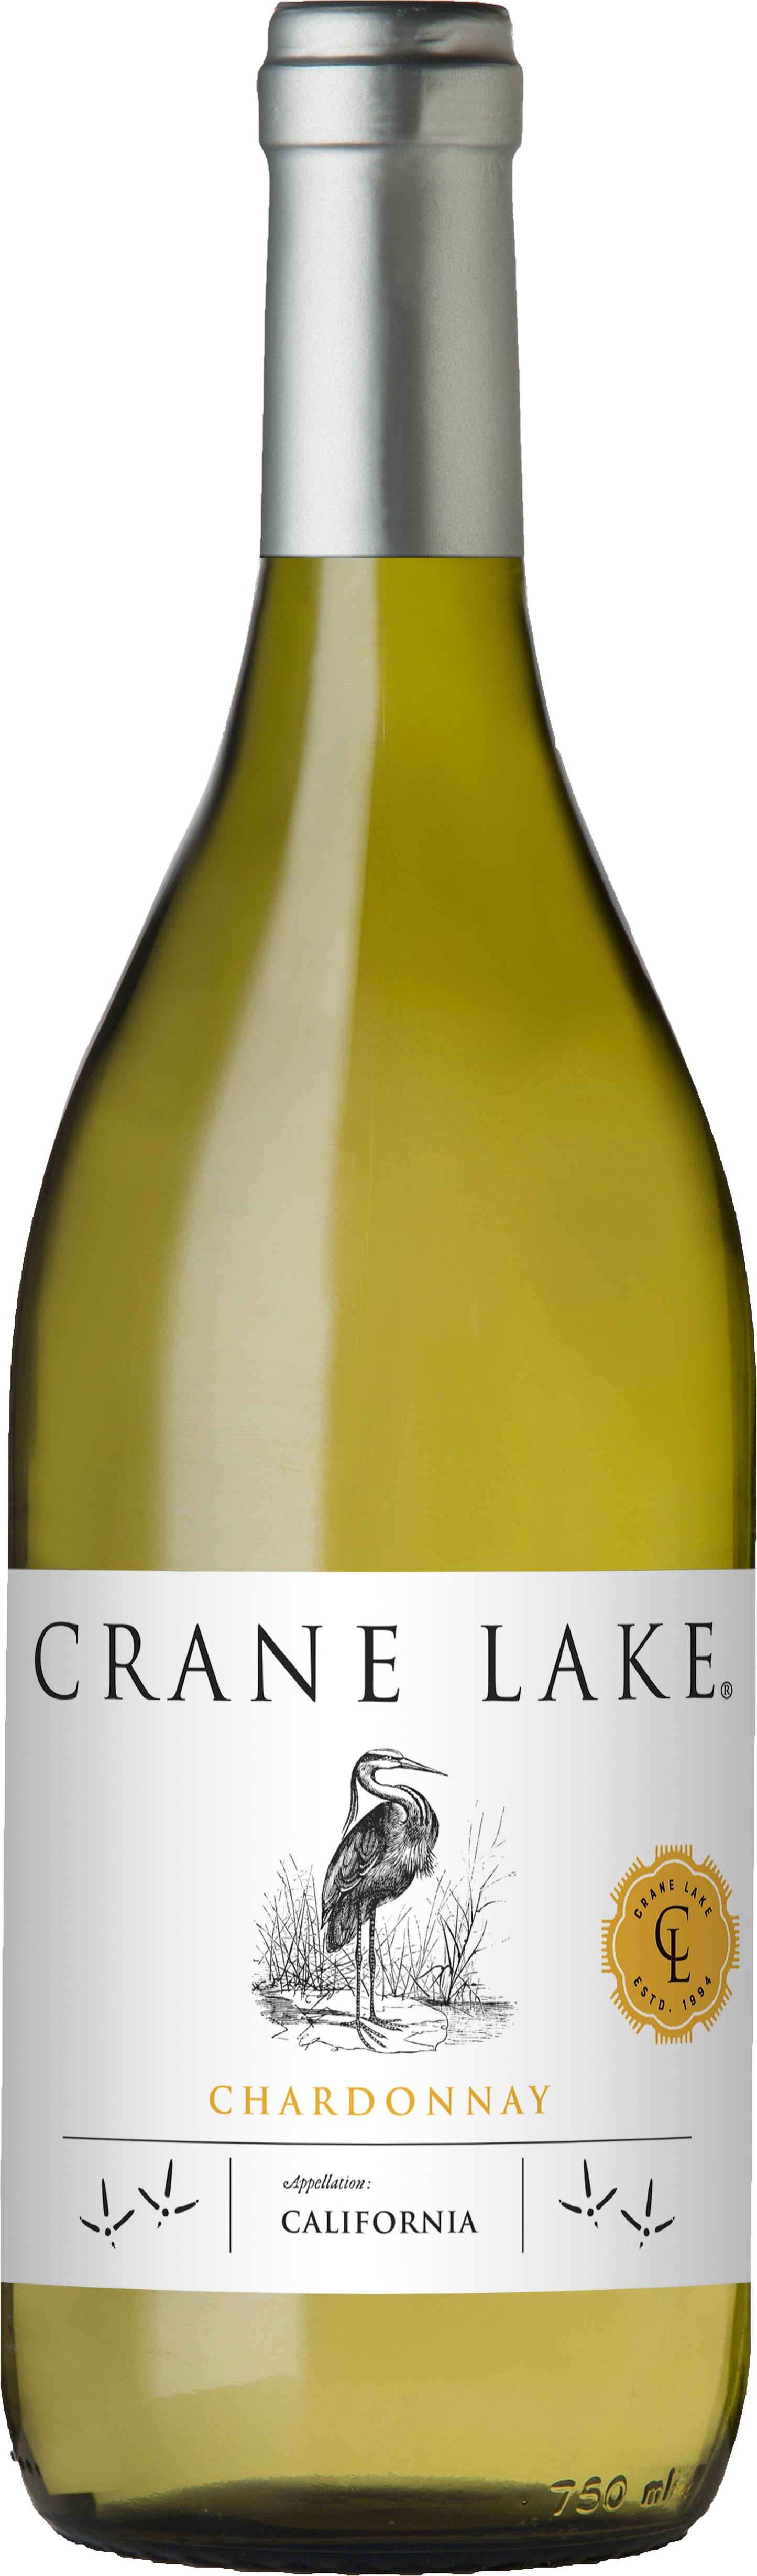 Crane Lake Chardonnay 2019